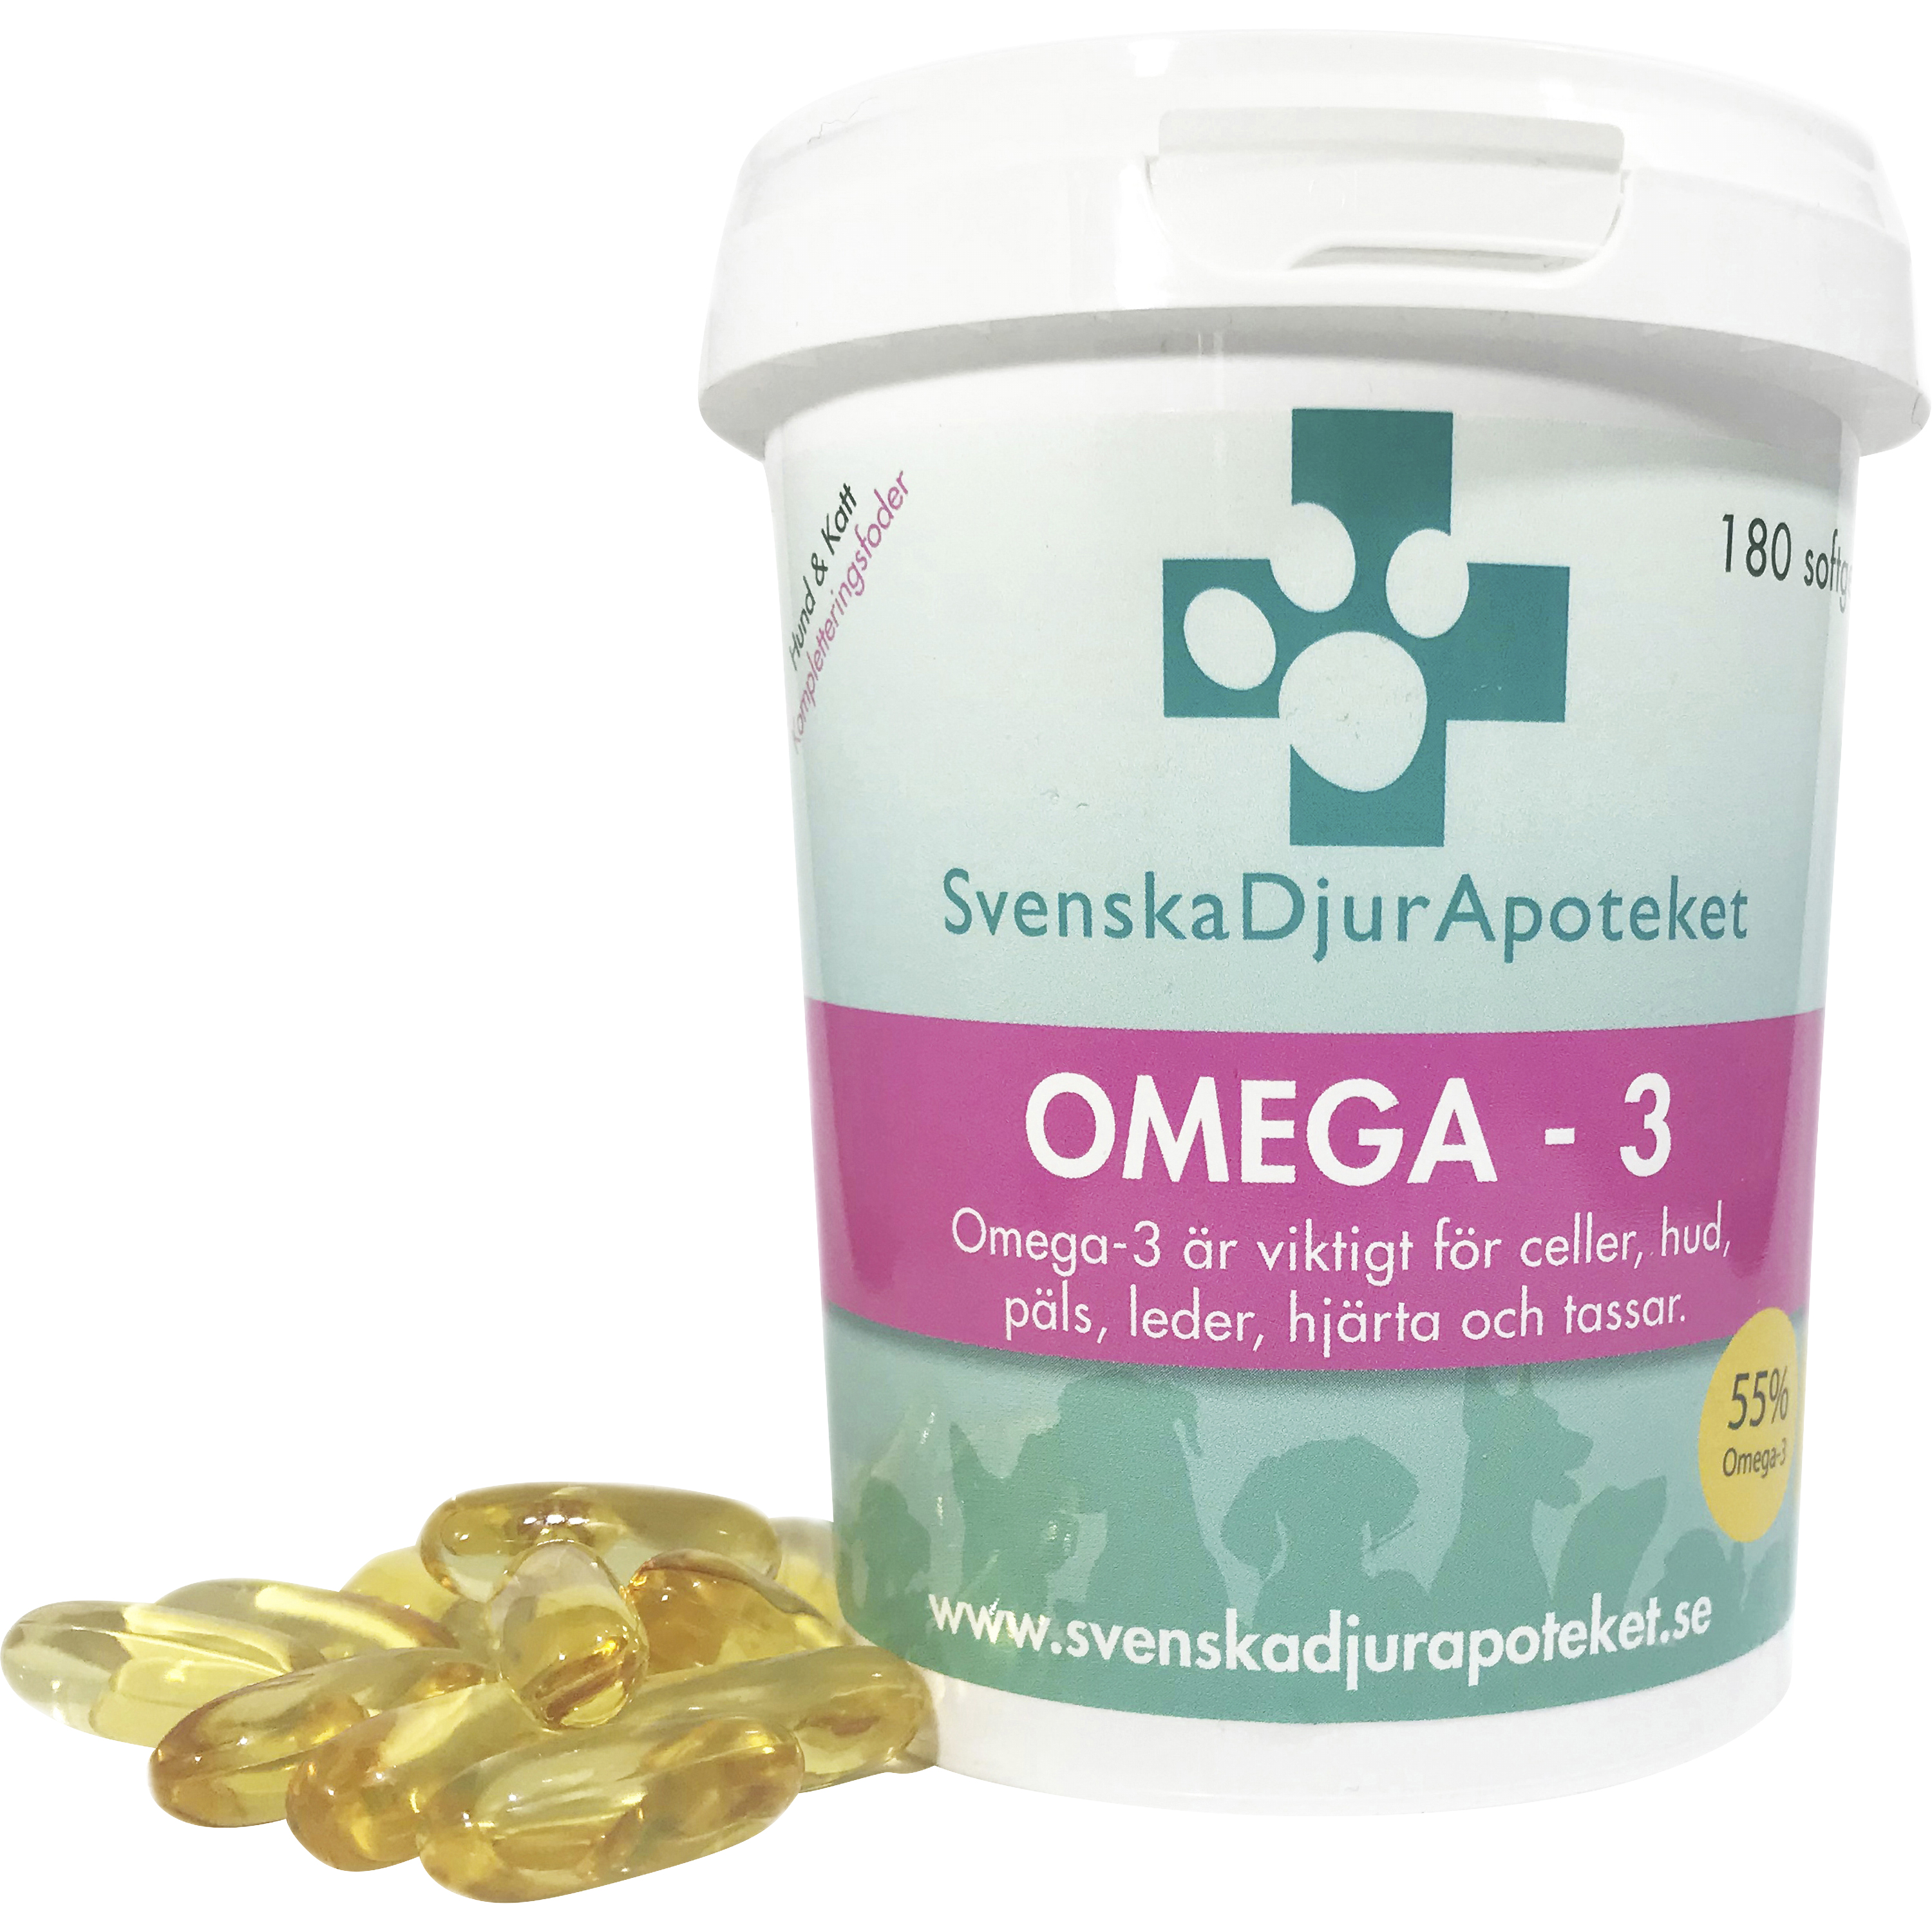 Kosttillskott Svenska DjurApoteket Omega-3 180 tabletter